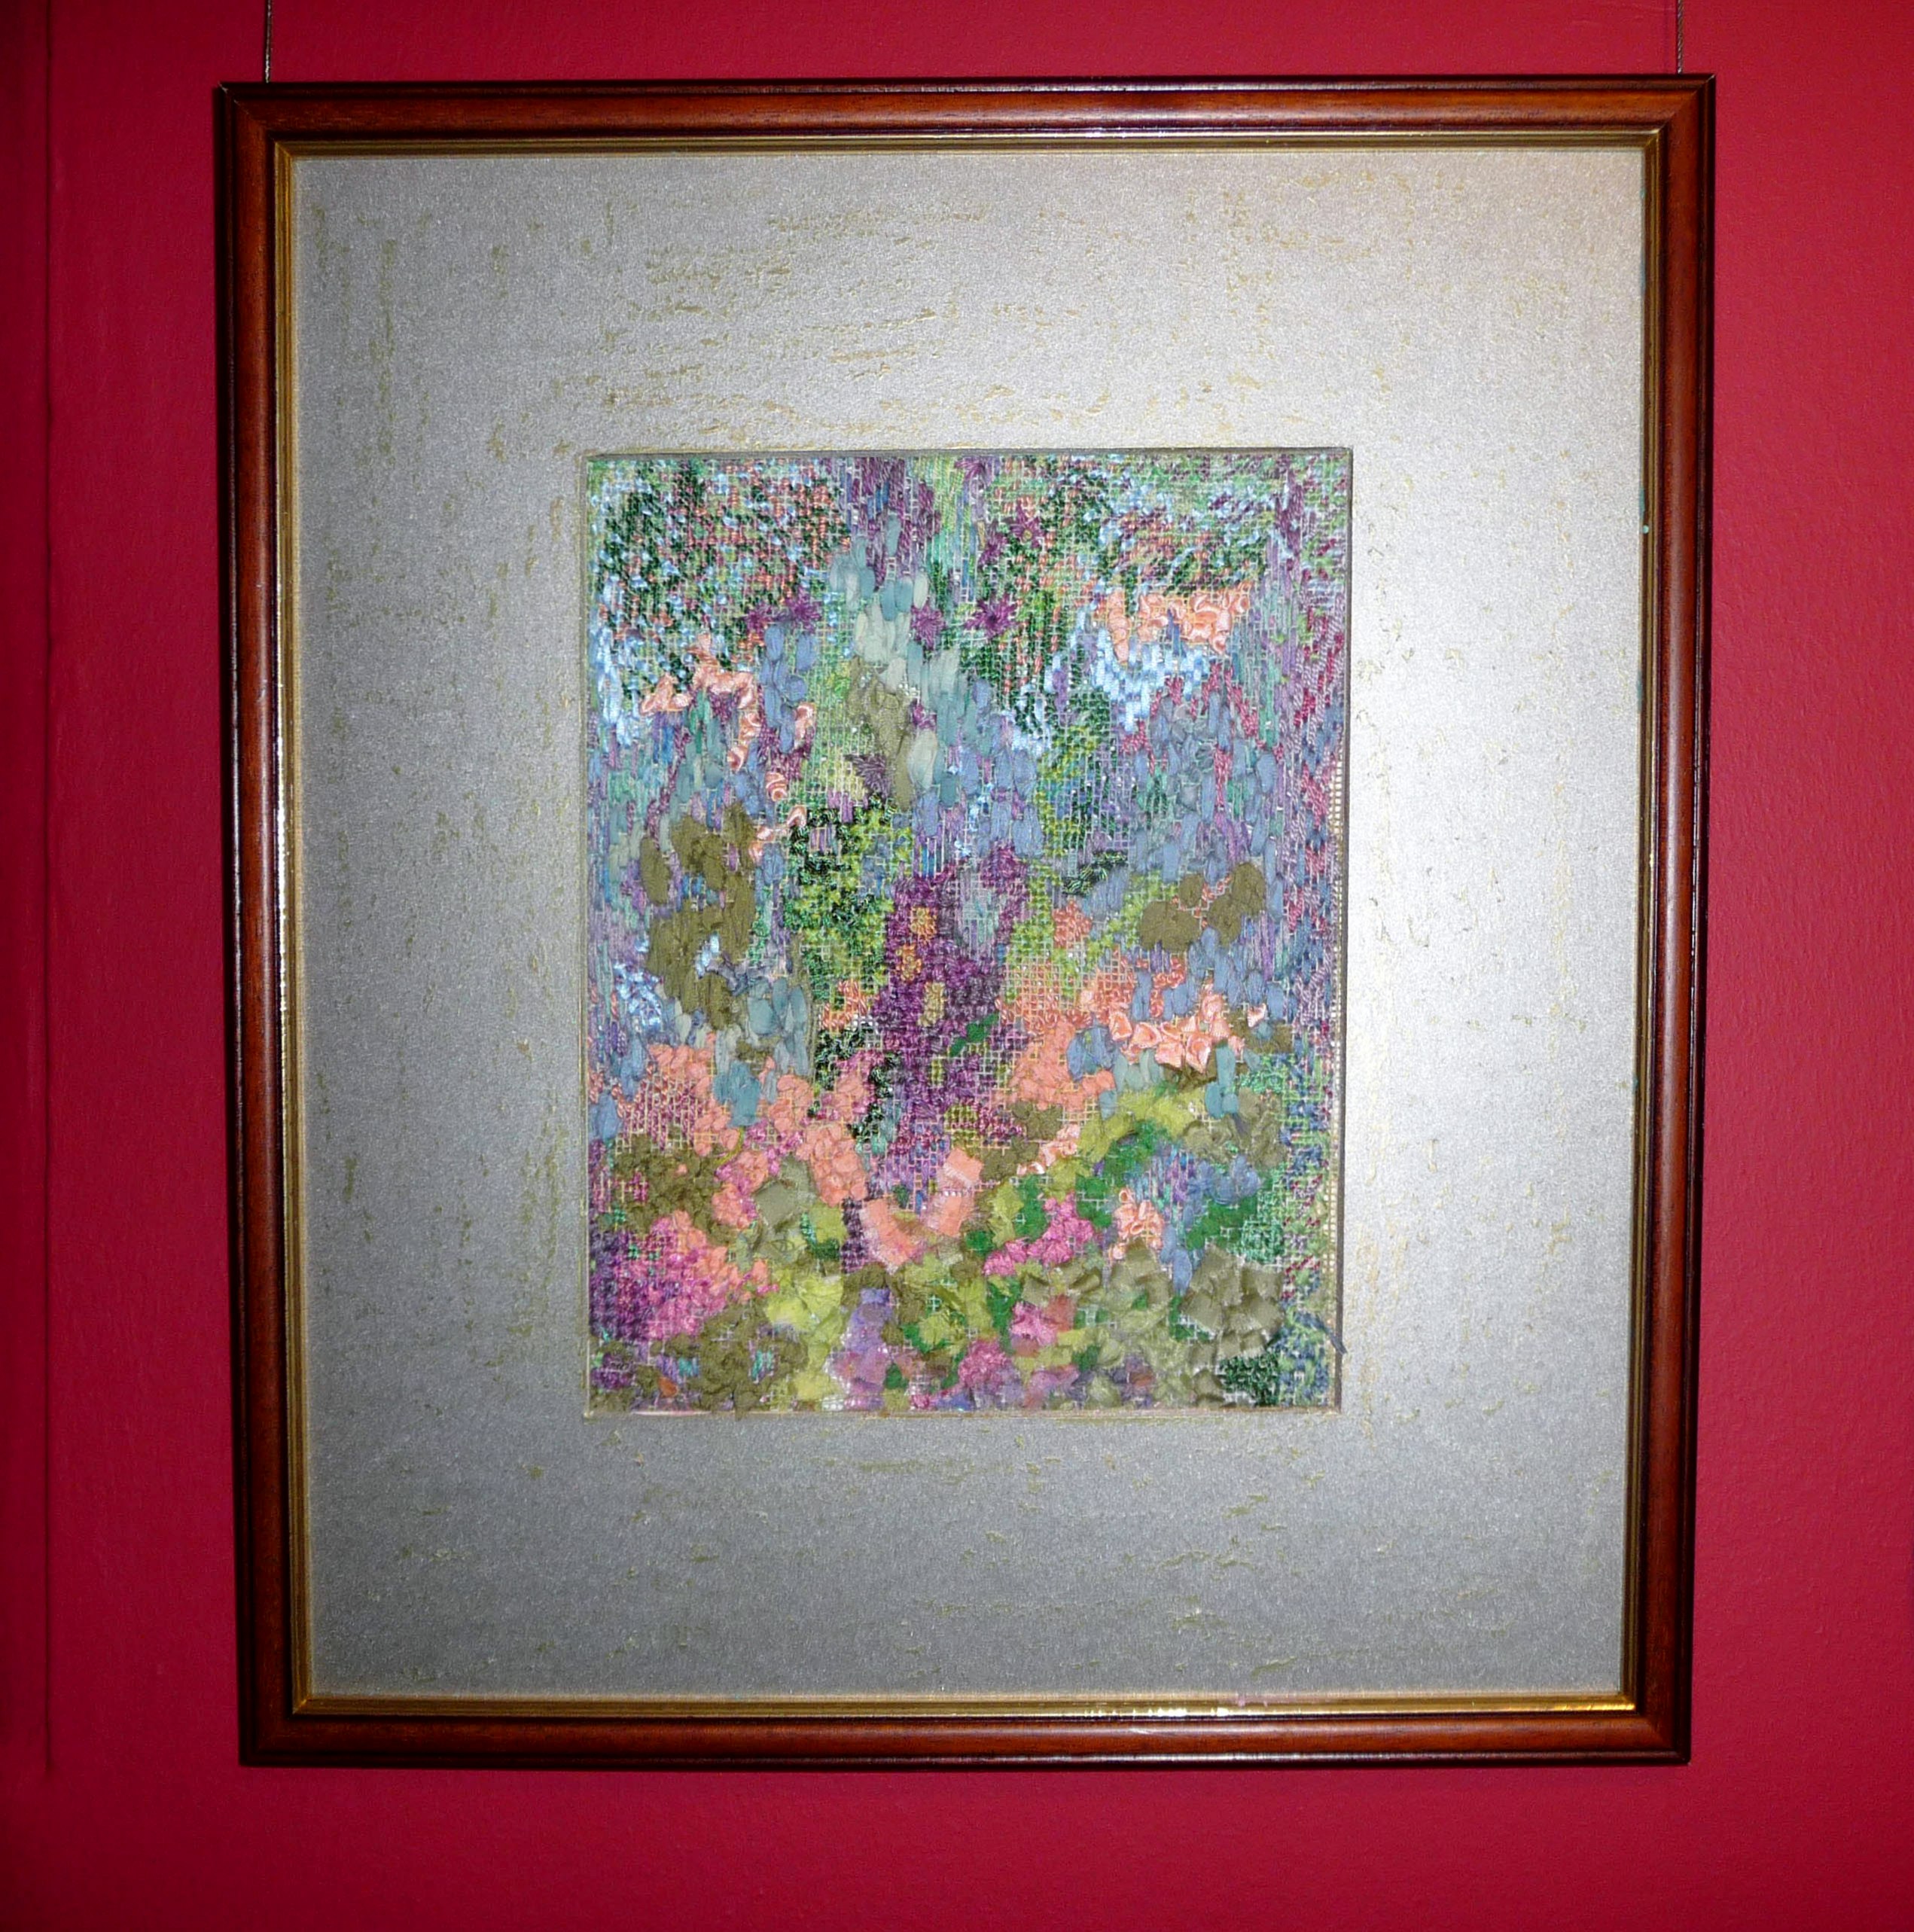 THE GARDEN, 2011, June Hodgkiss, fabric strips on canvas